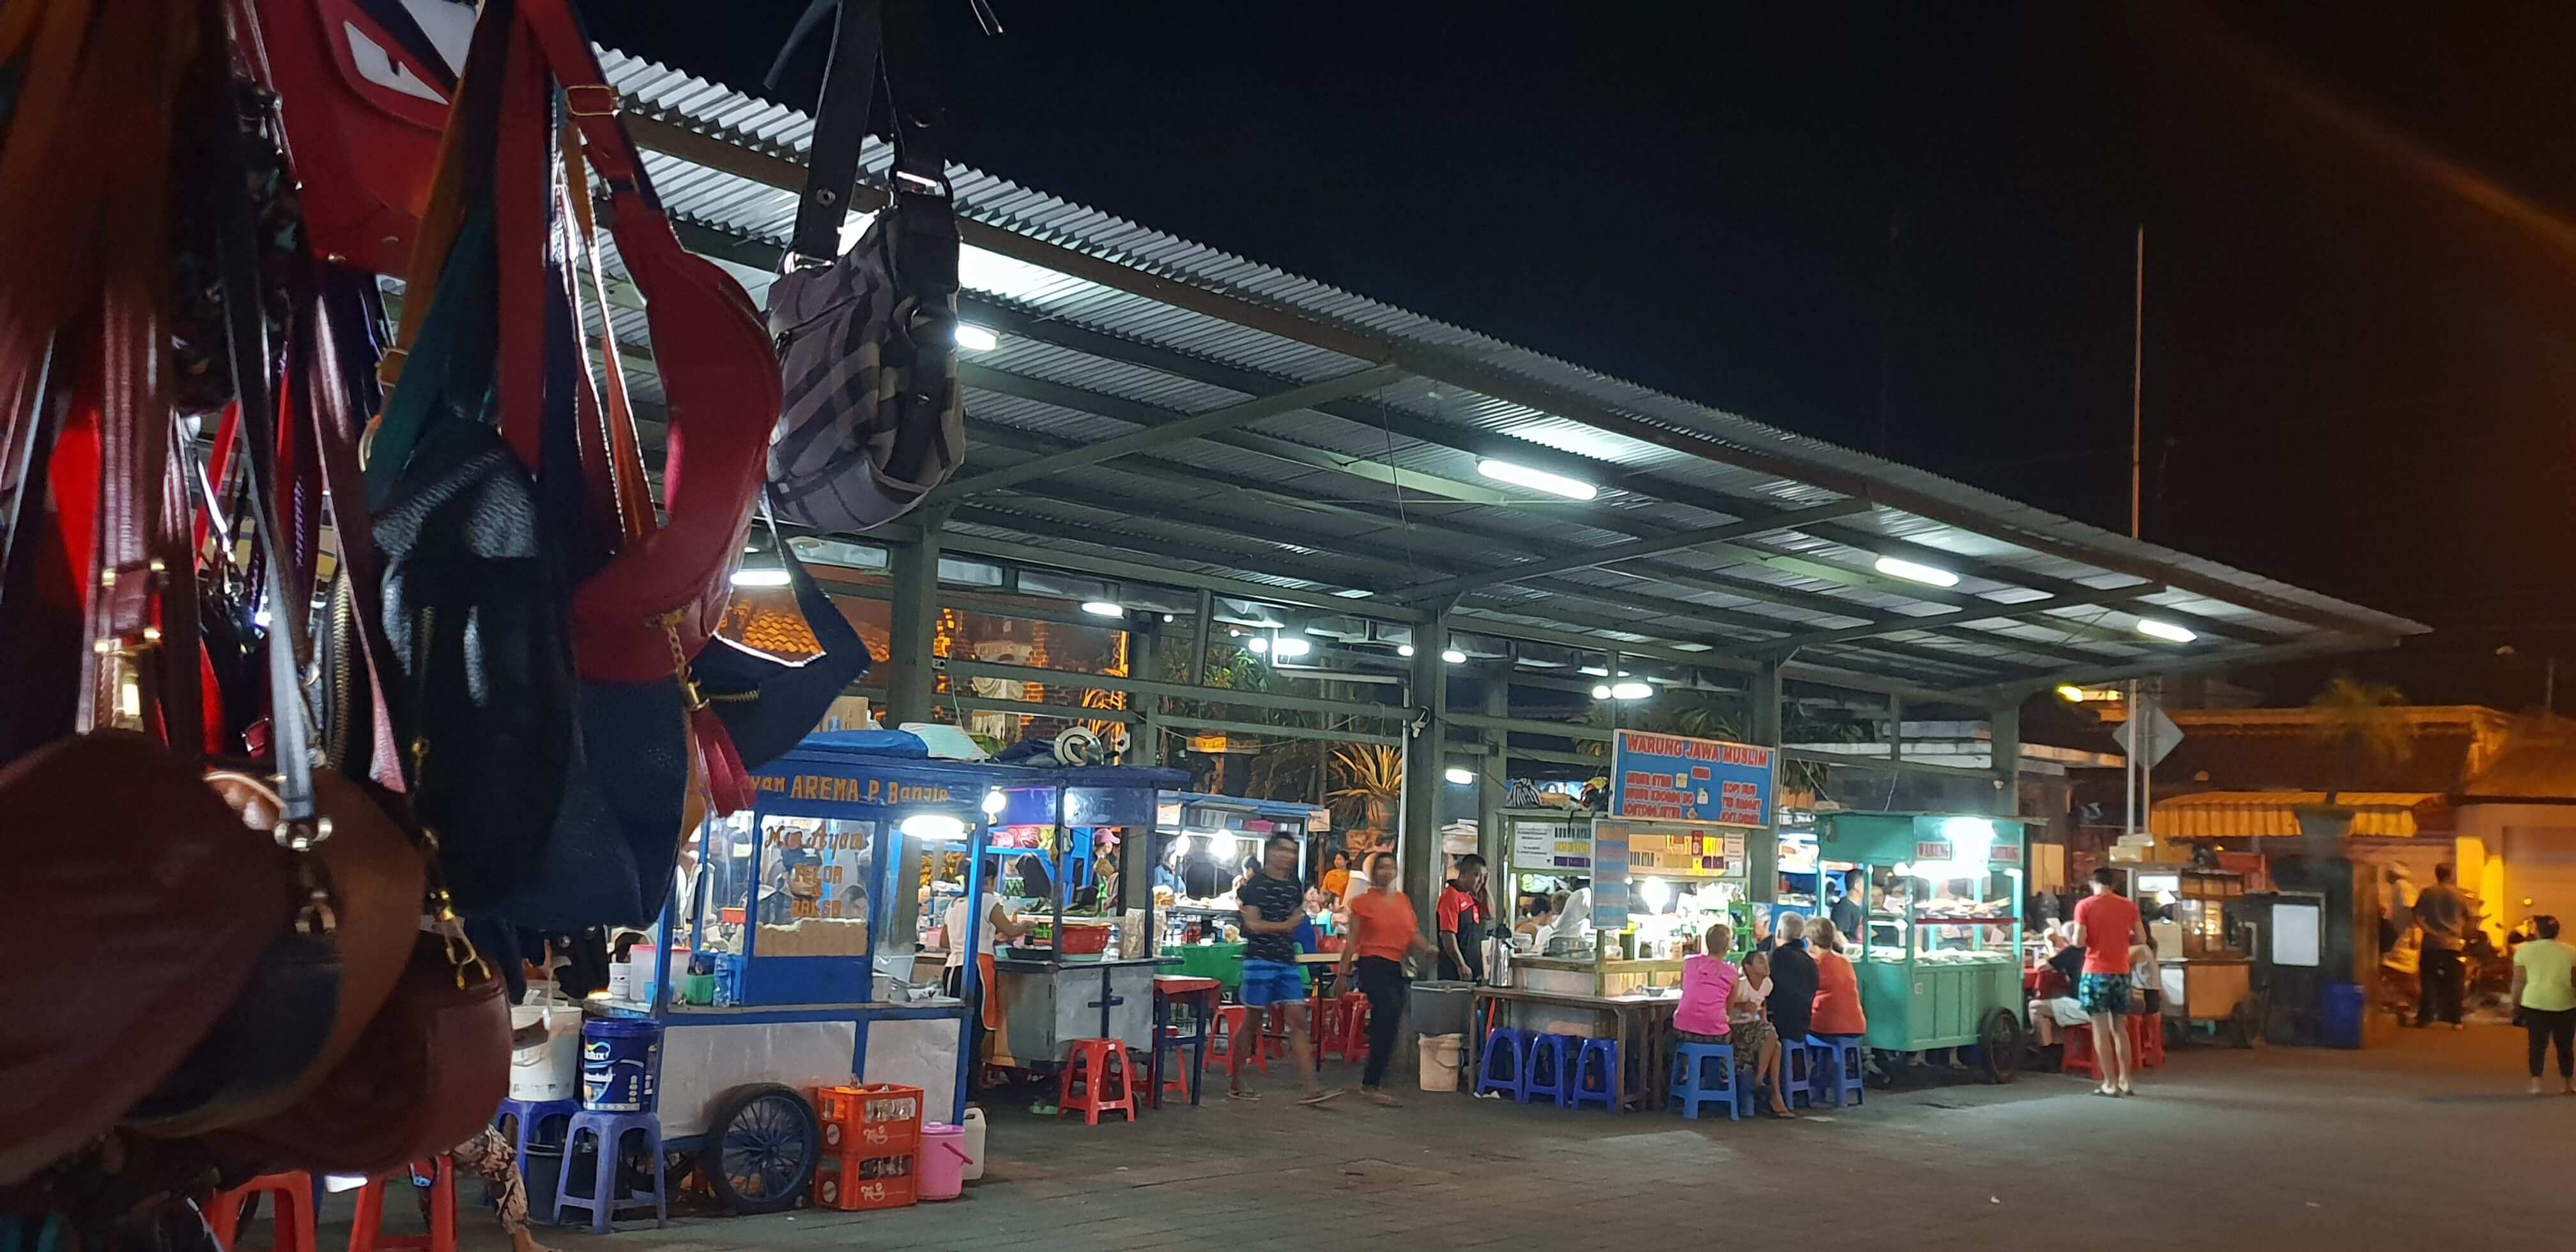 Enjoy eating at the small warungs and shopping at the stalls inside the Pasar Sindhu night market